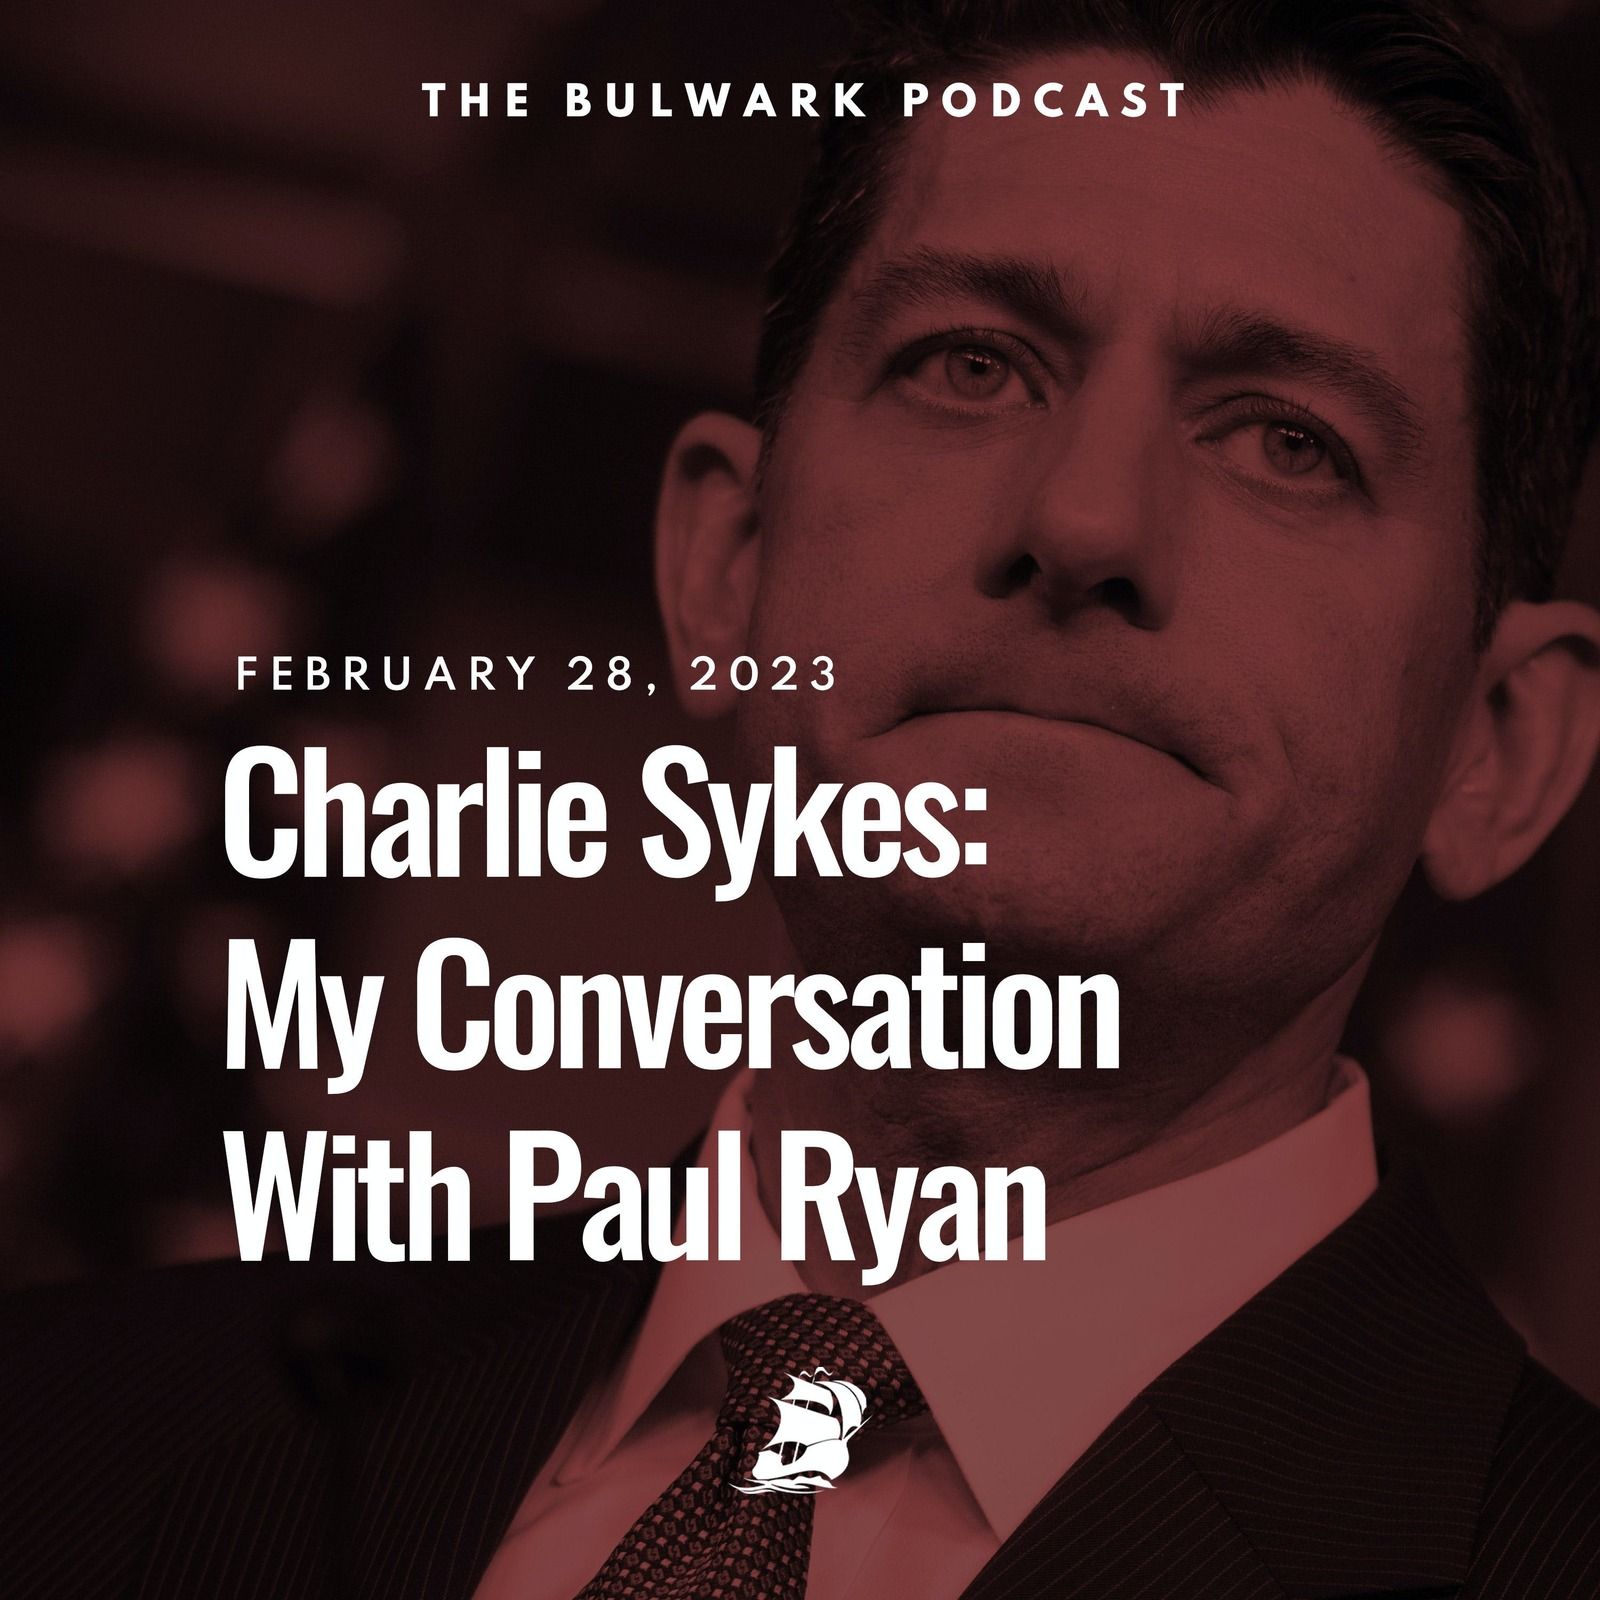 My Conversation With Paul Ryan